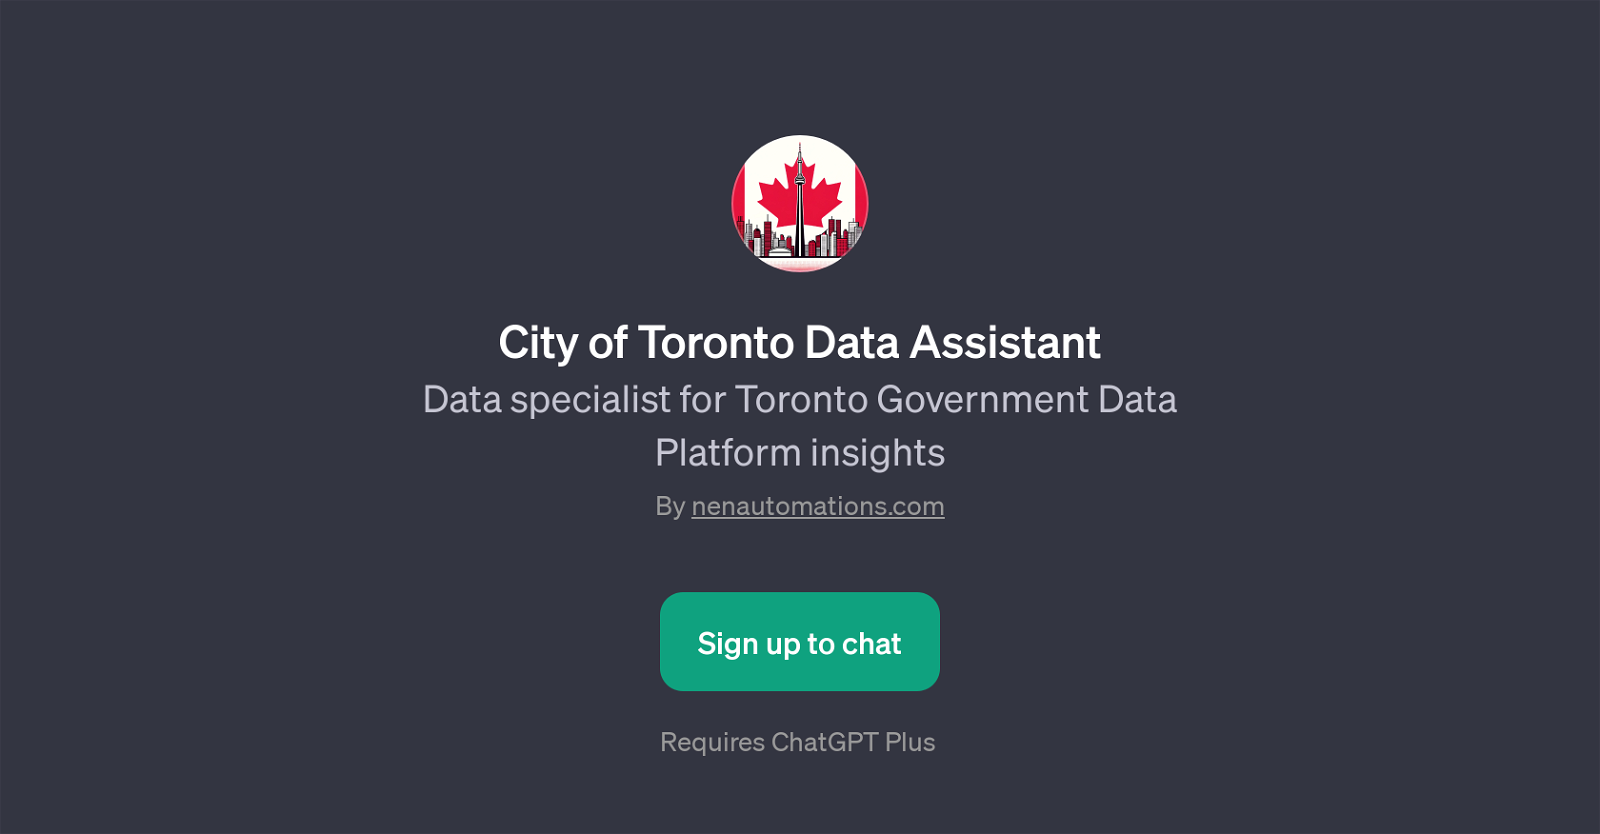 City of Toronto Data Assistant website